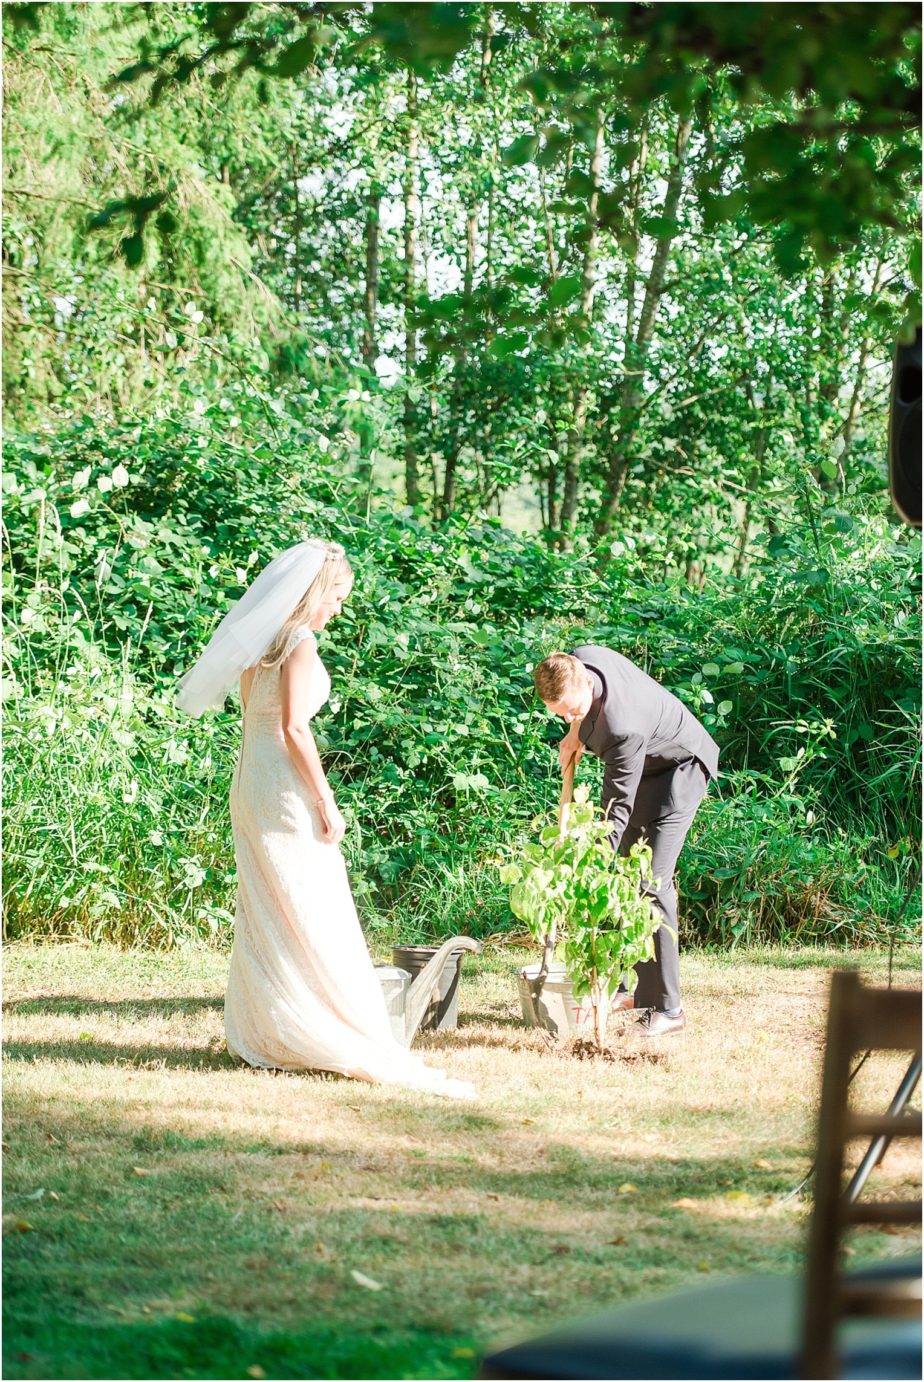 DIY backyard onalaska wedding Onalaska Photographer Bryan and Olivia ceremony